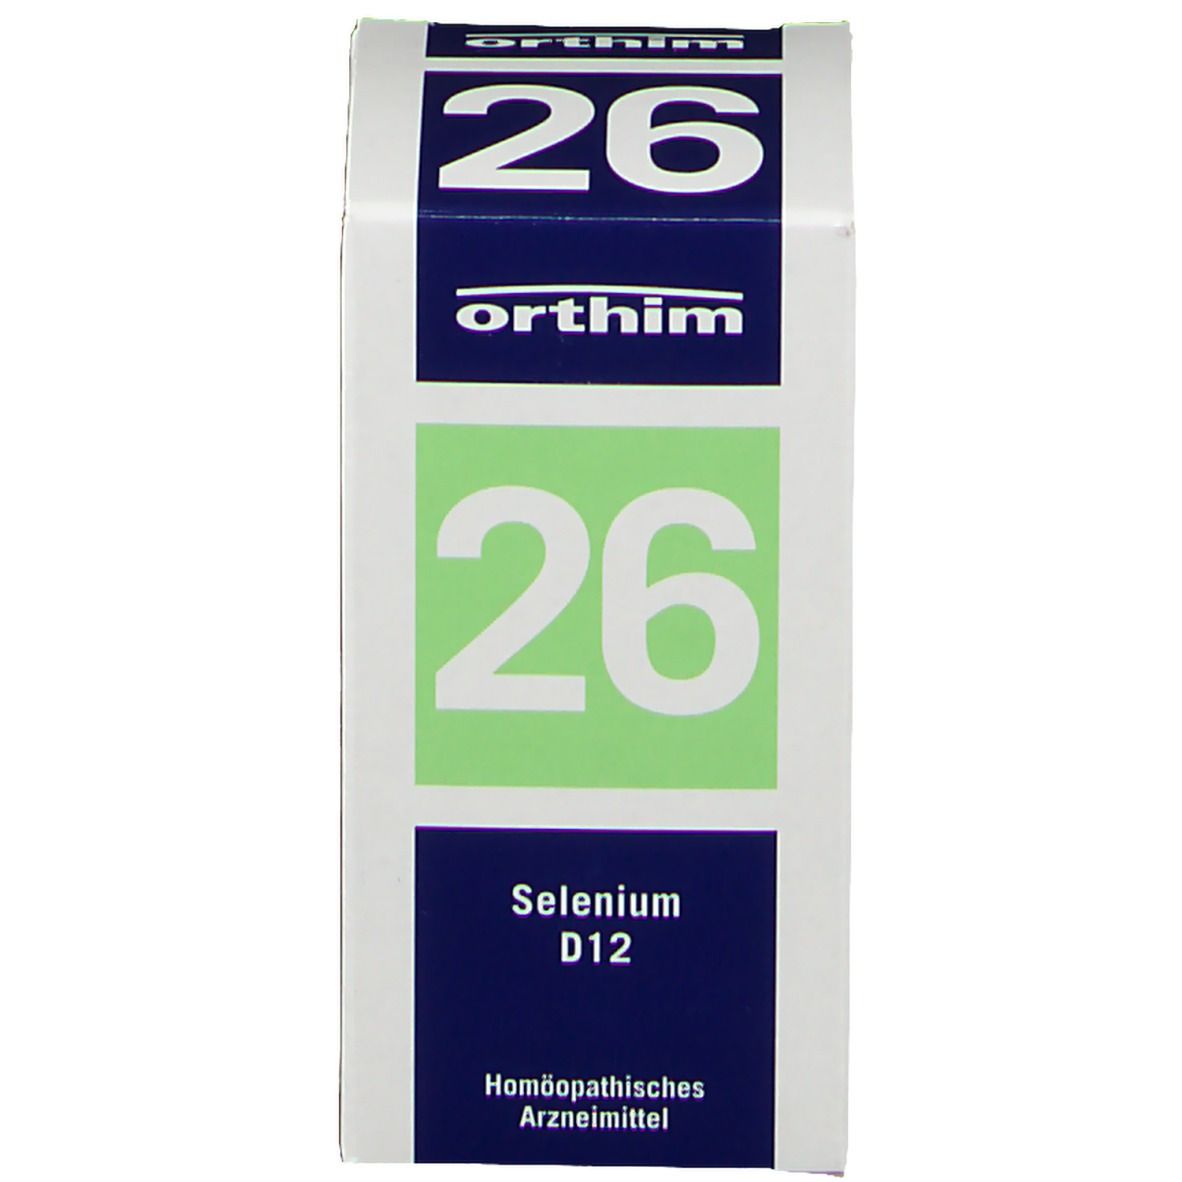 Biochemie orthim® Nr. 26 Selenium D12